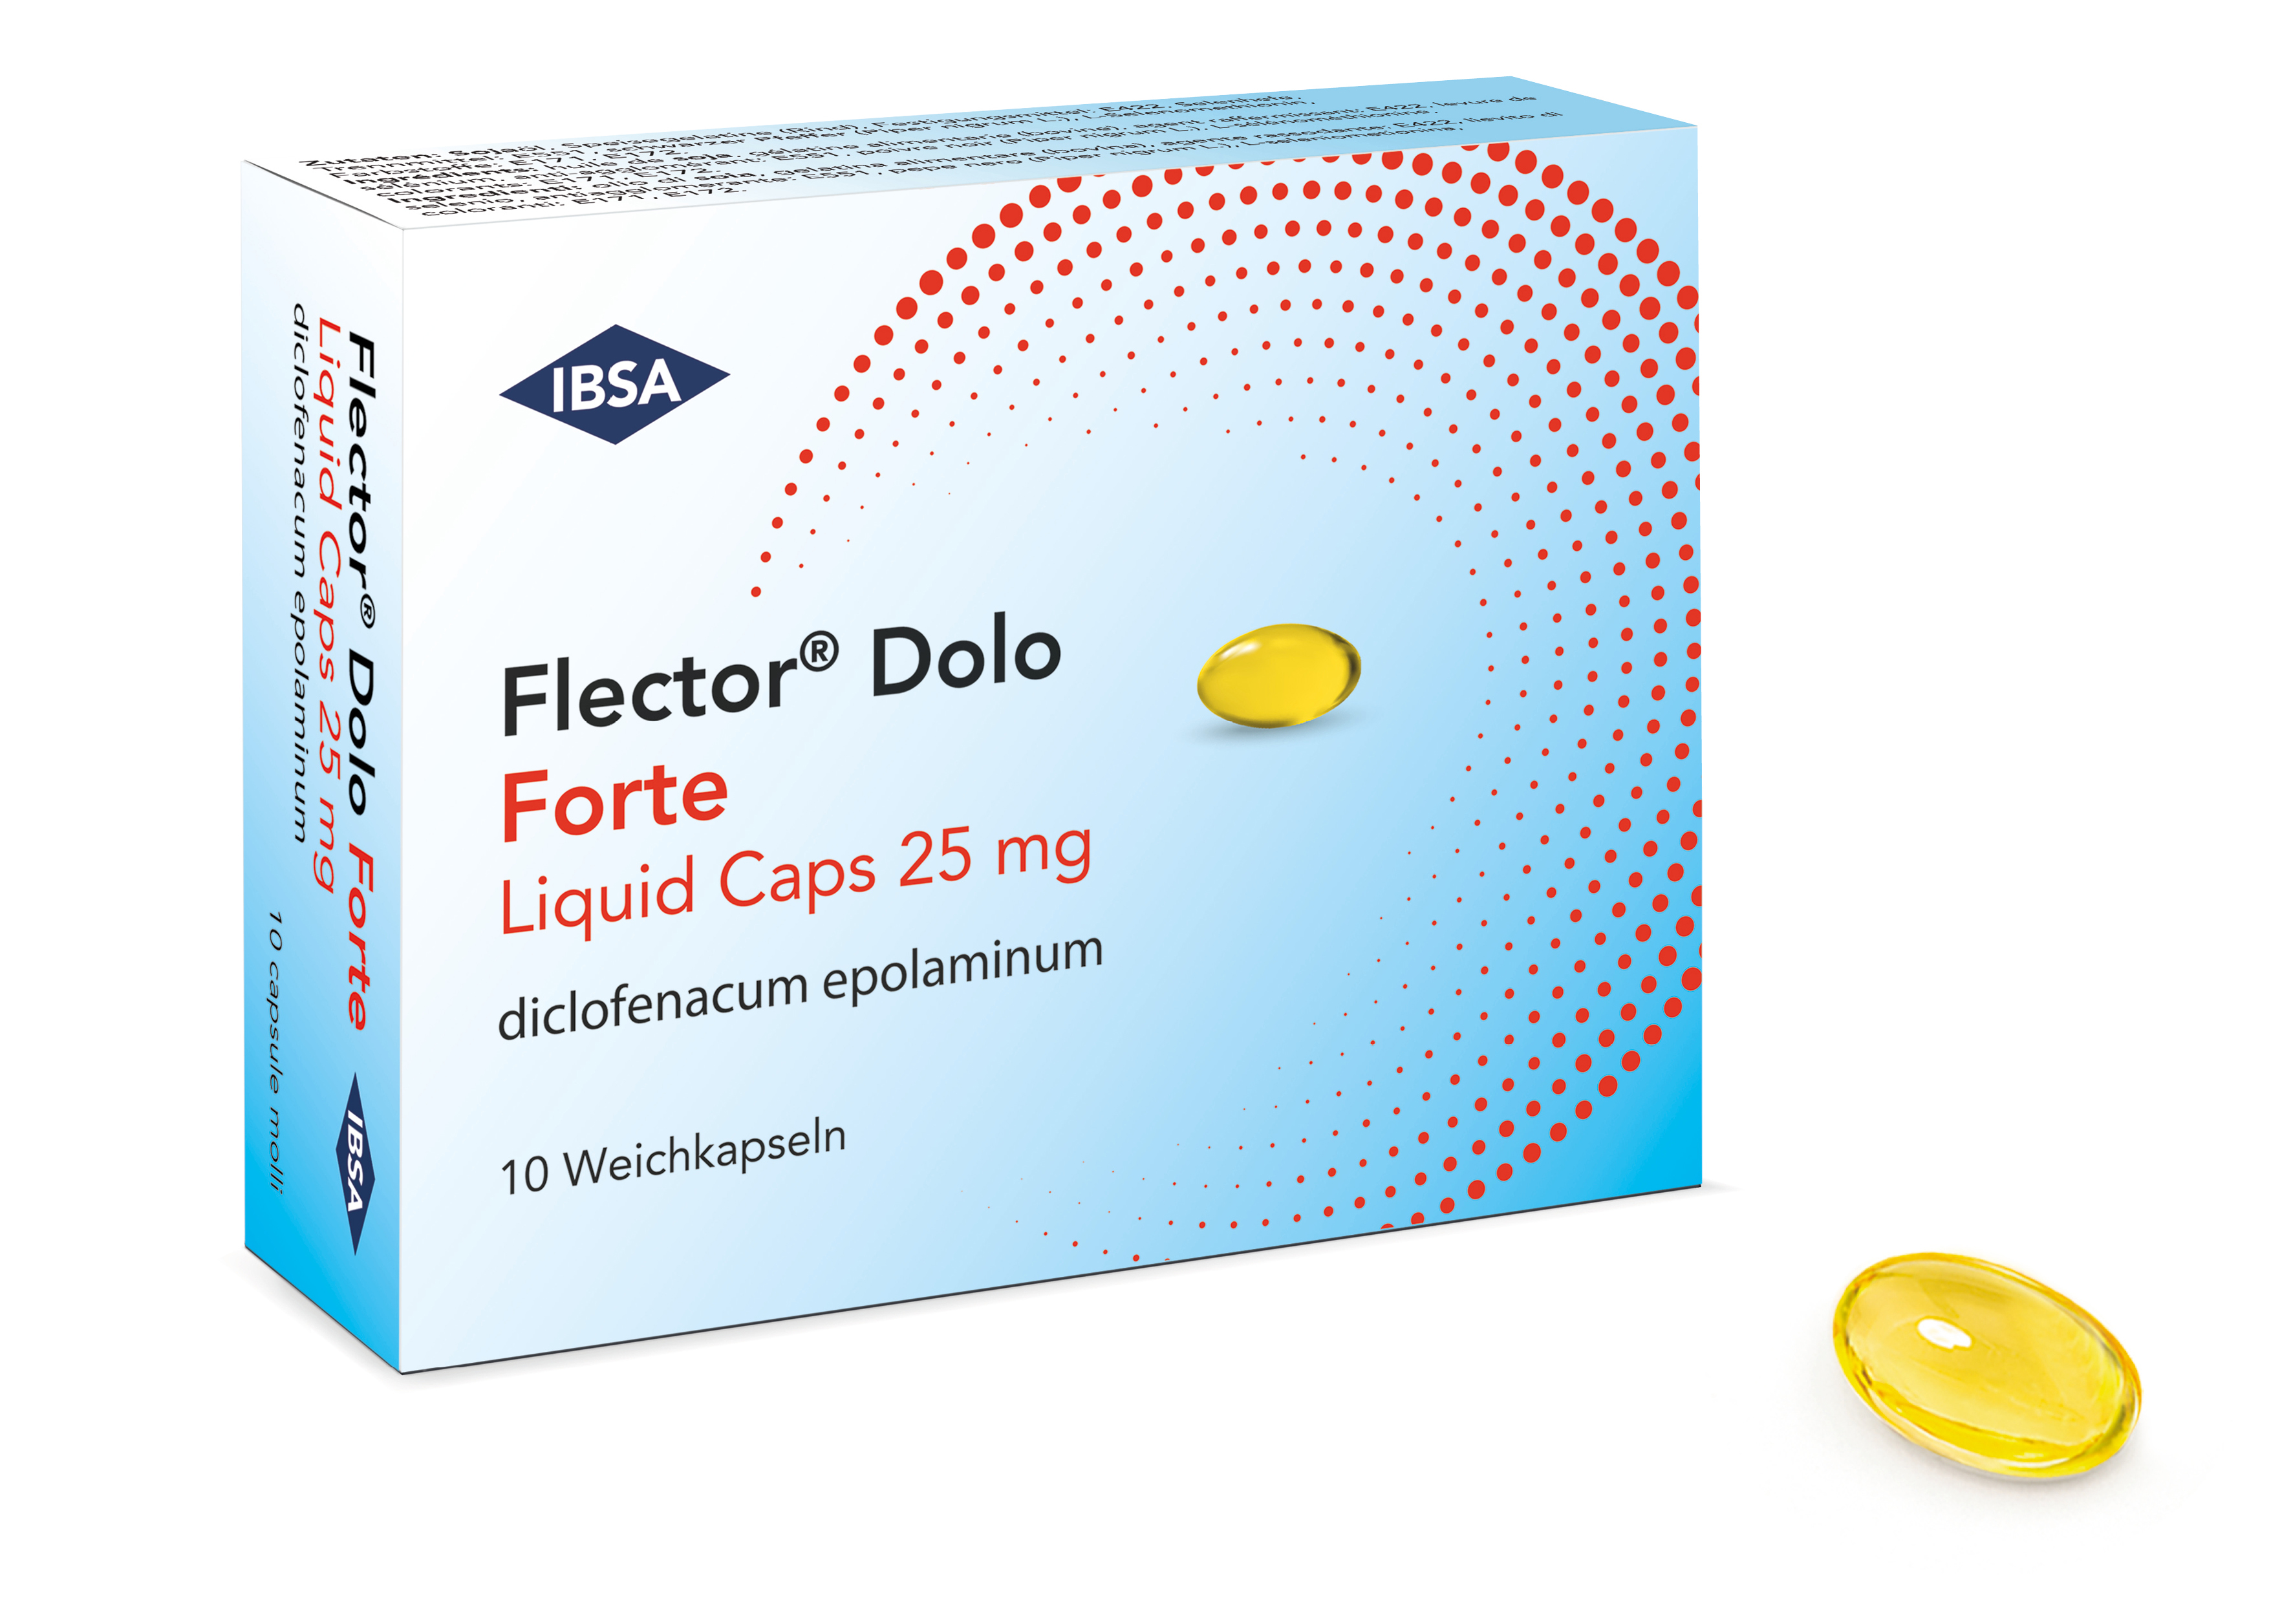 Pack-Flector-Dolo-Forte-Liquid-Caps_1-capsula_DE.jpg